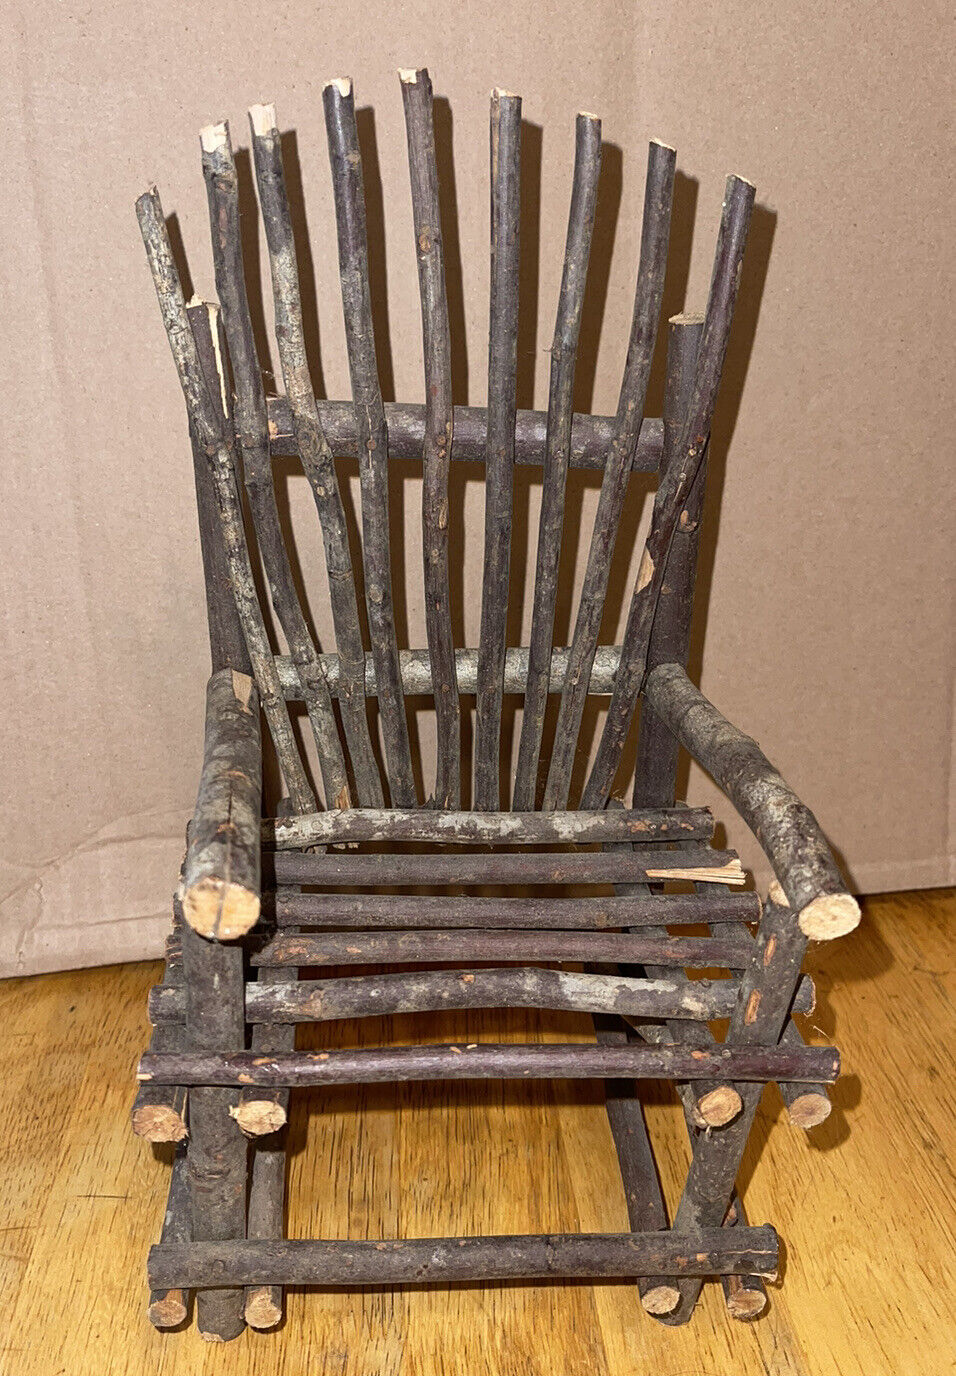 Folk Art Rustic Bent Wood Sticks Miniature Chair For Dolls Or Decor ￼ 7” X  12” 